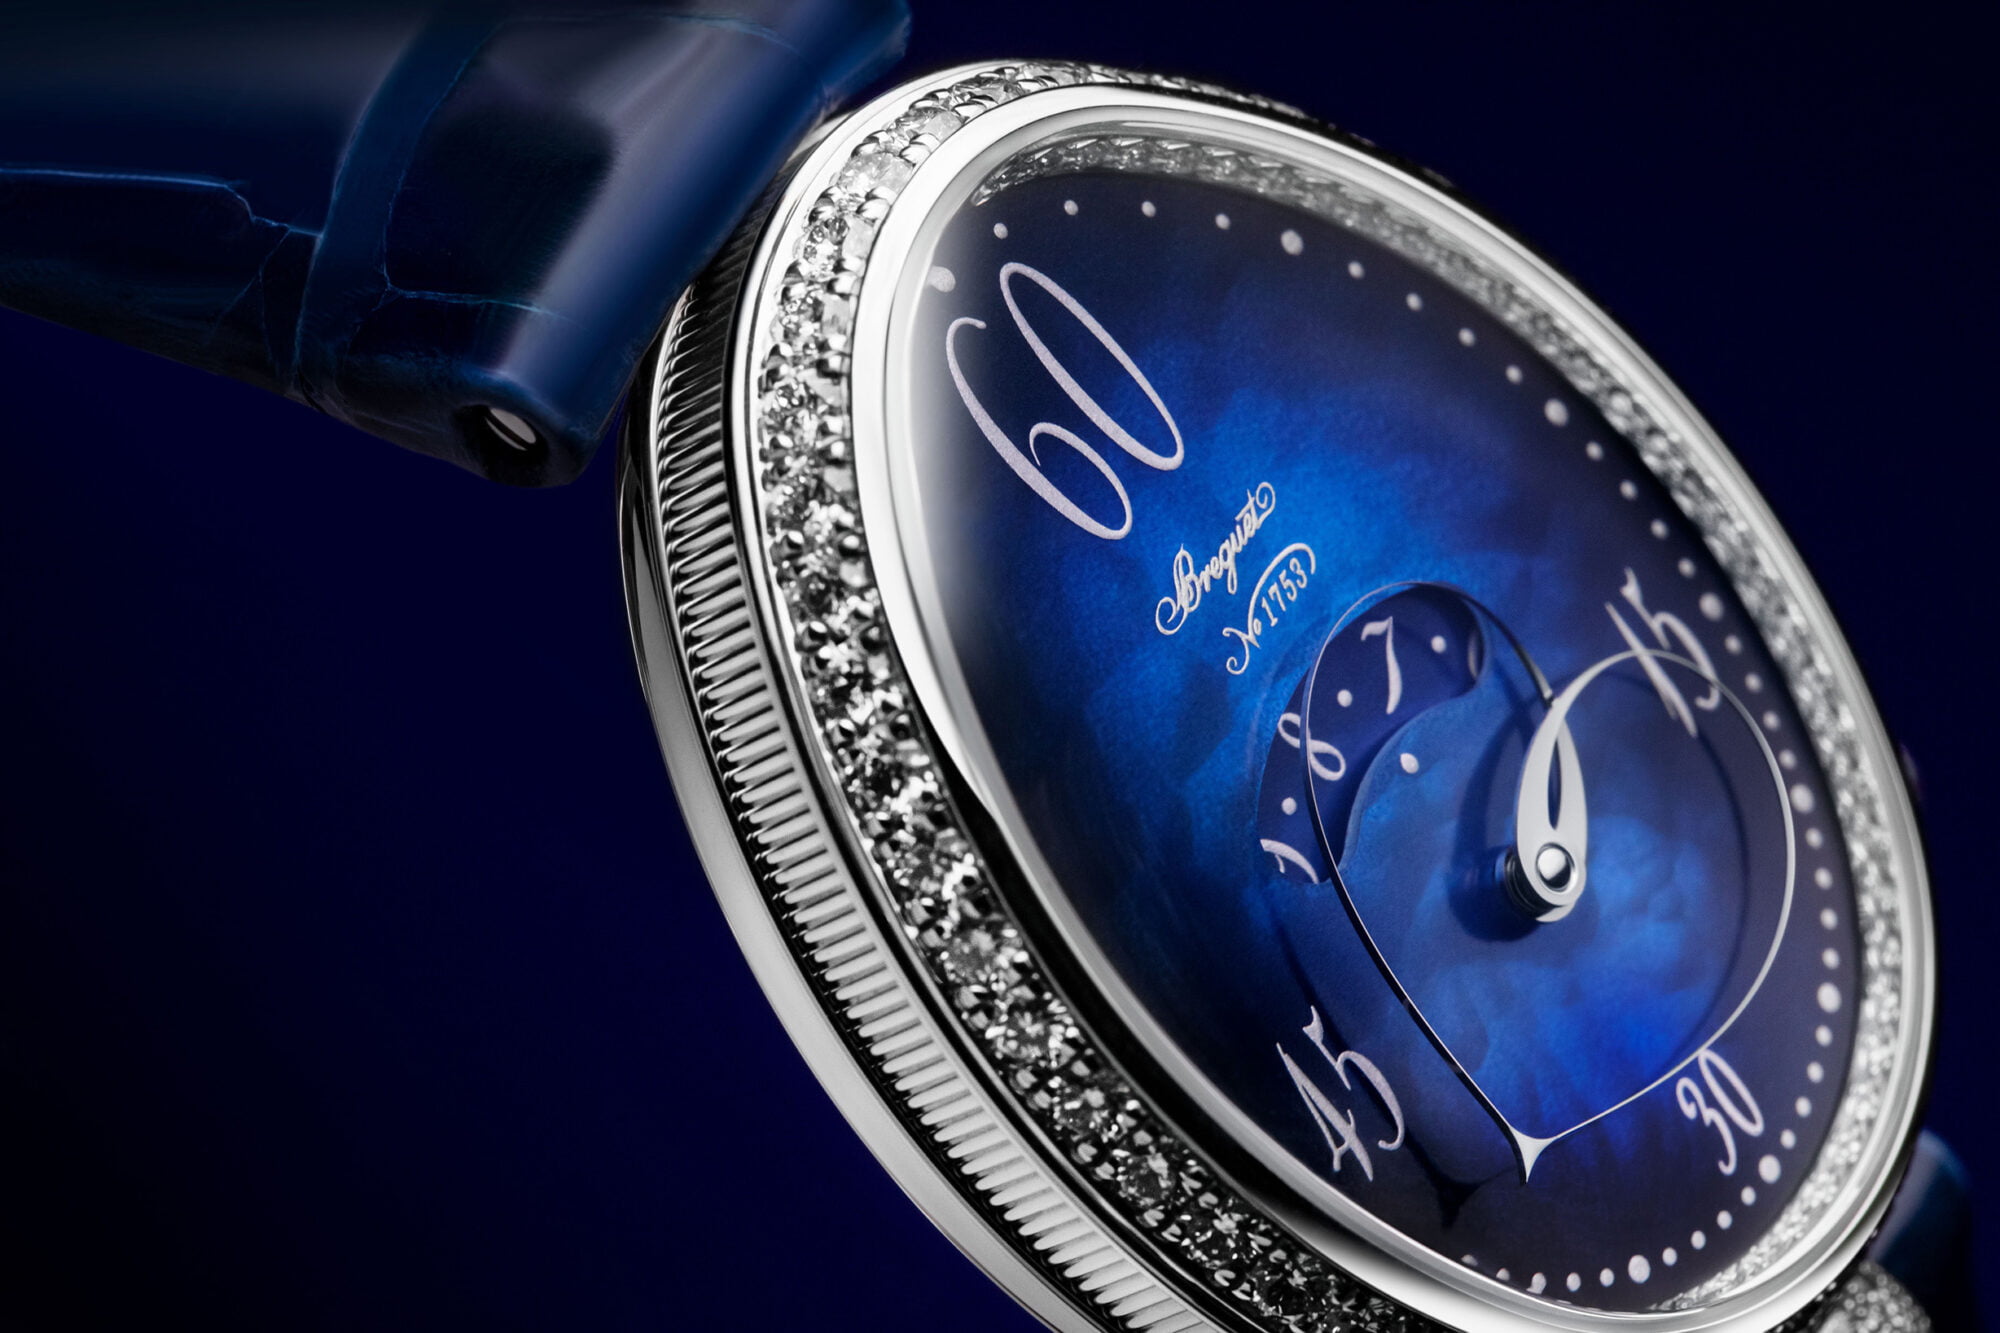 Breguet’s Reine de Naples limited edition watch